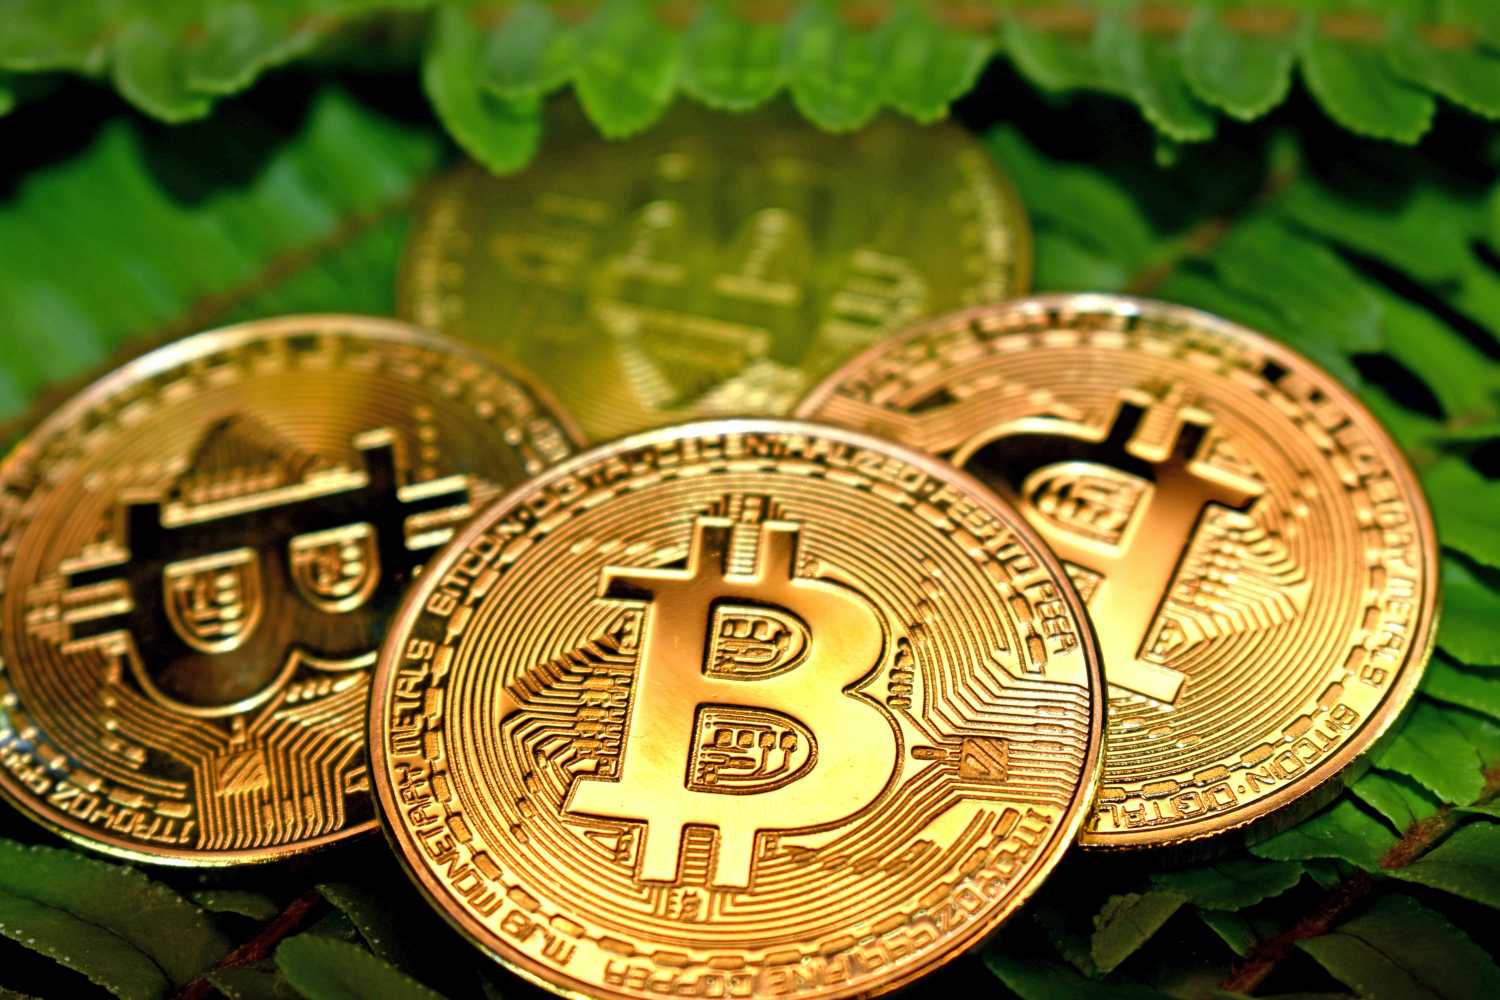 Bitcoin (BTC) is Digital Property – Michael Saylor